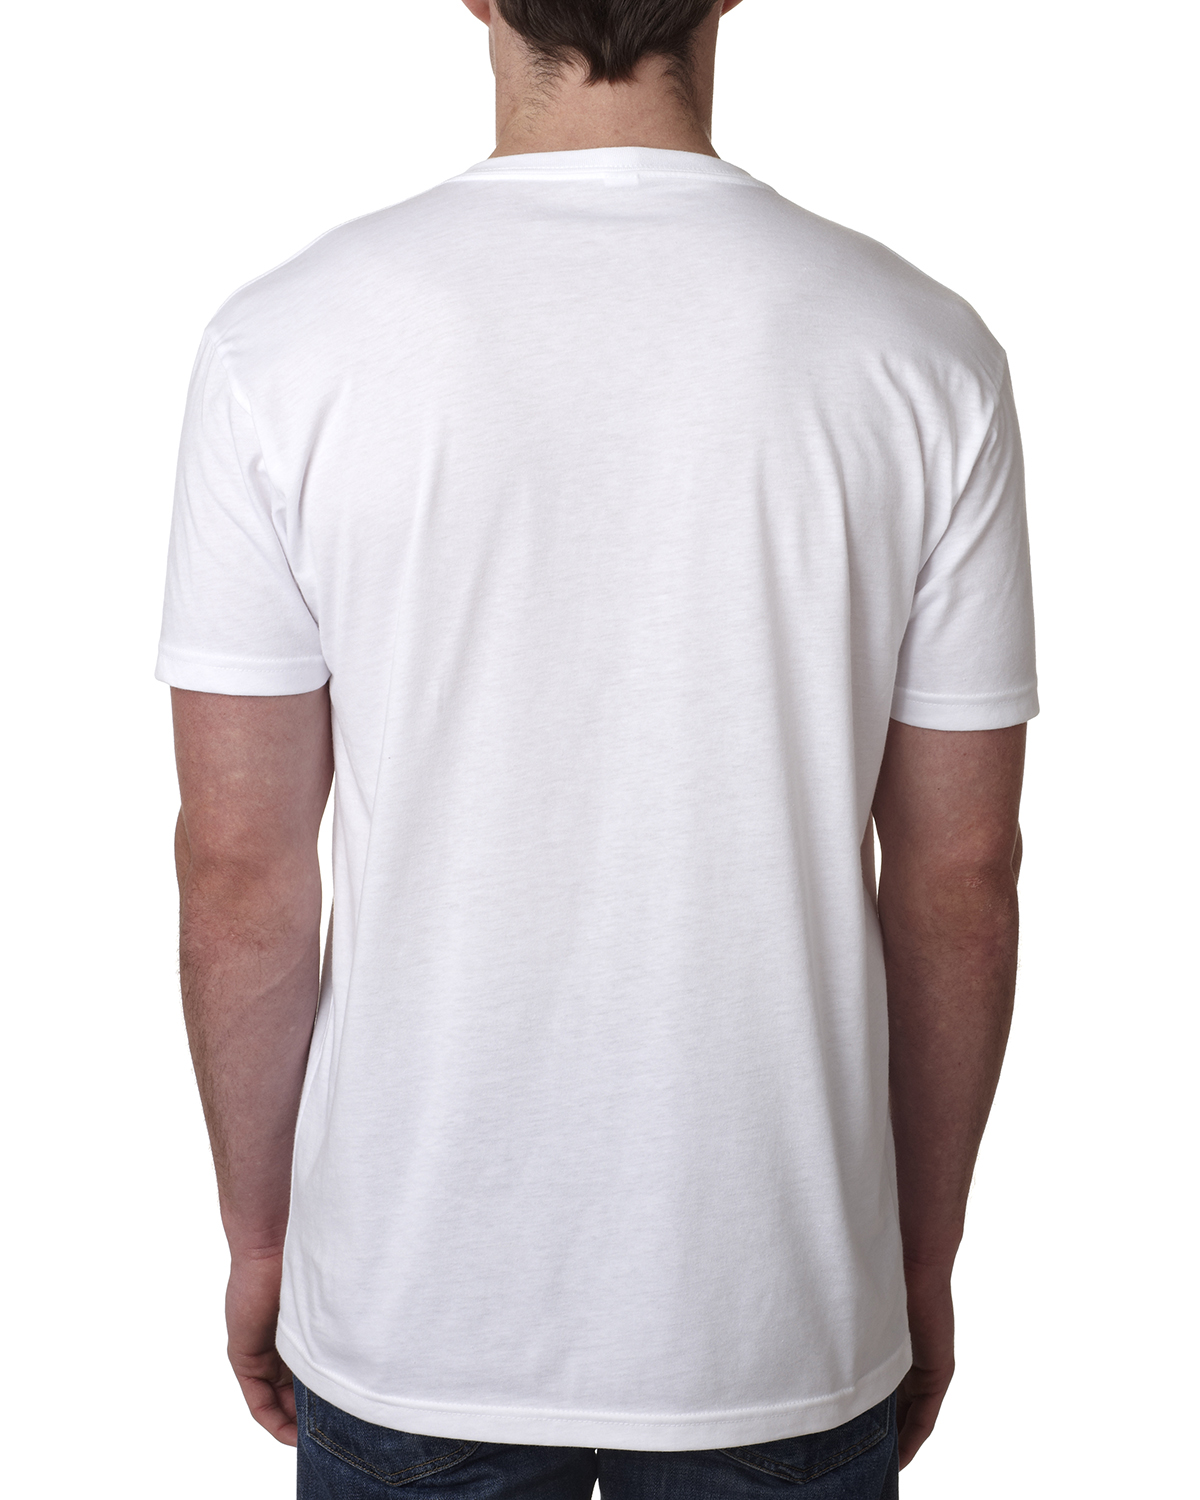 Next Level Men's Premium CVC V-Neck Soft 2XL T-Shirt B-6240 | eBay